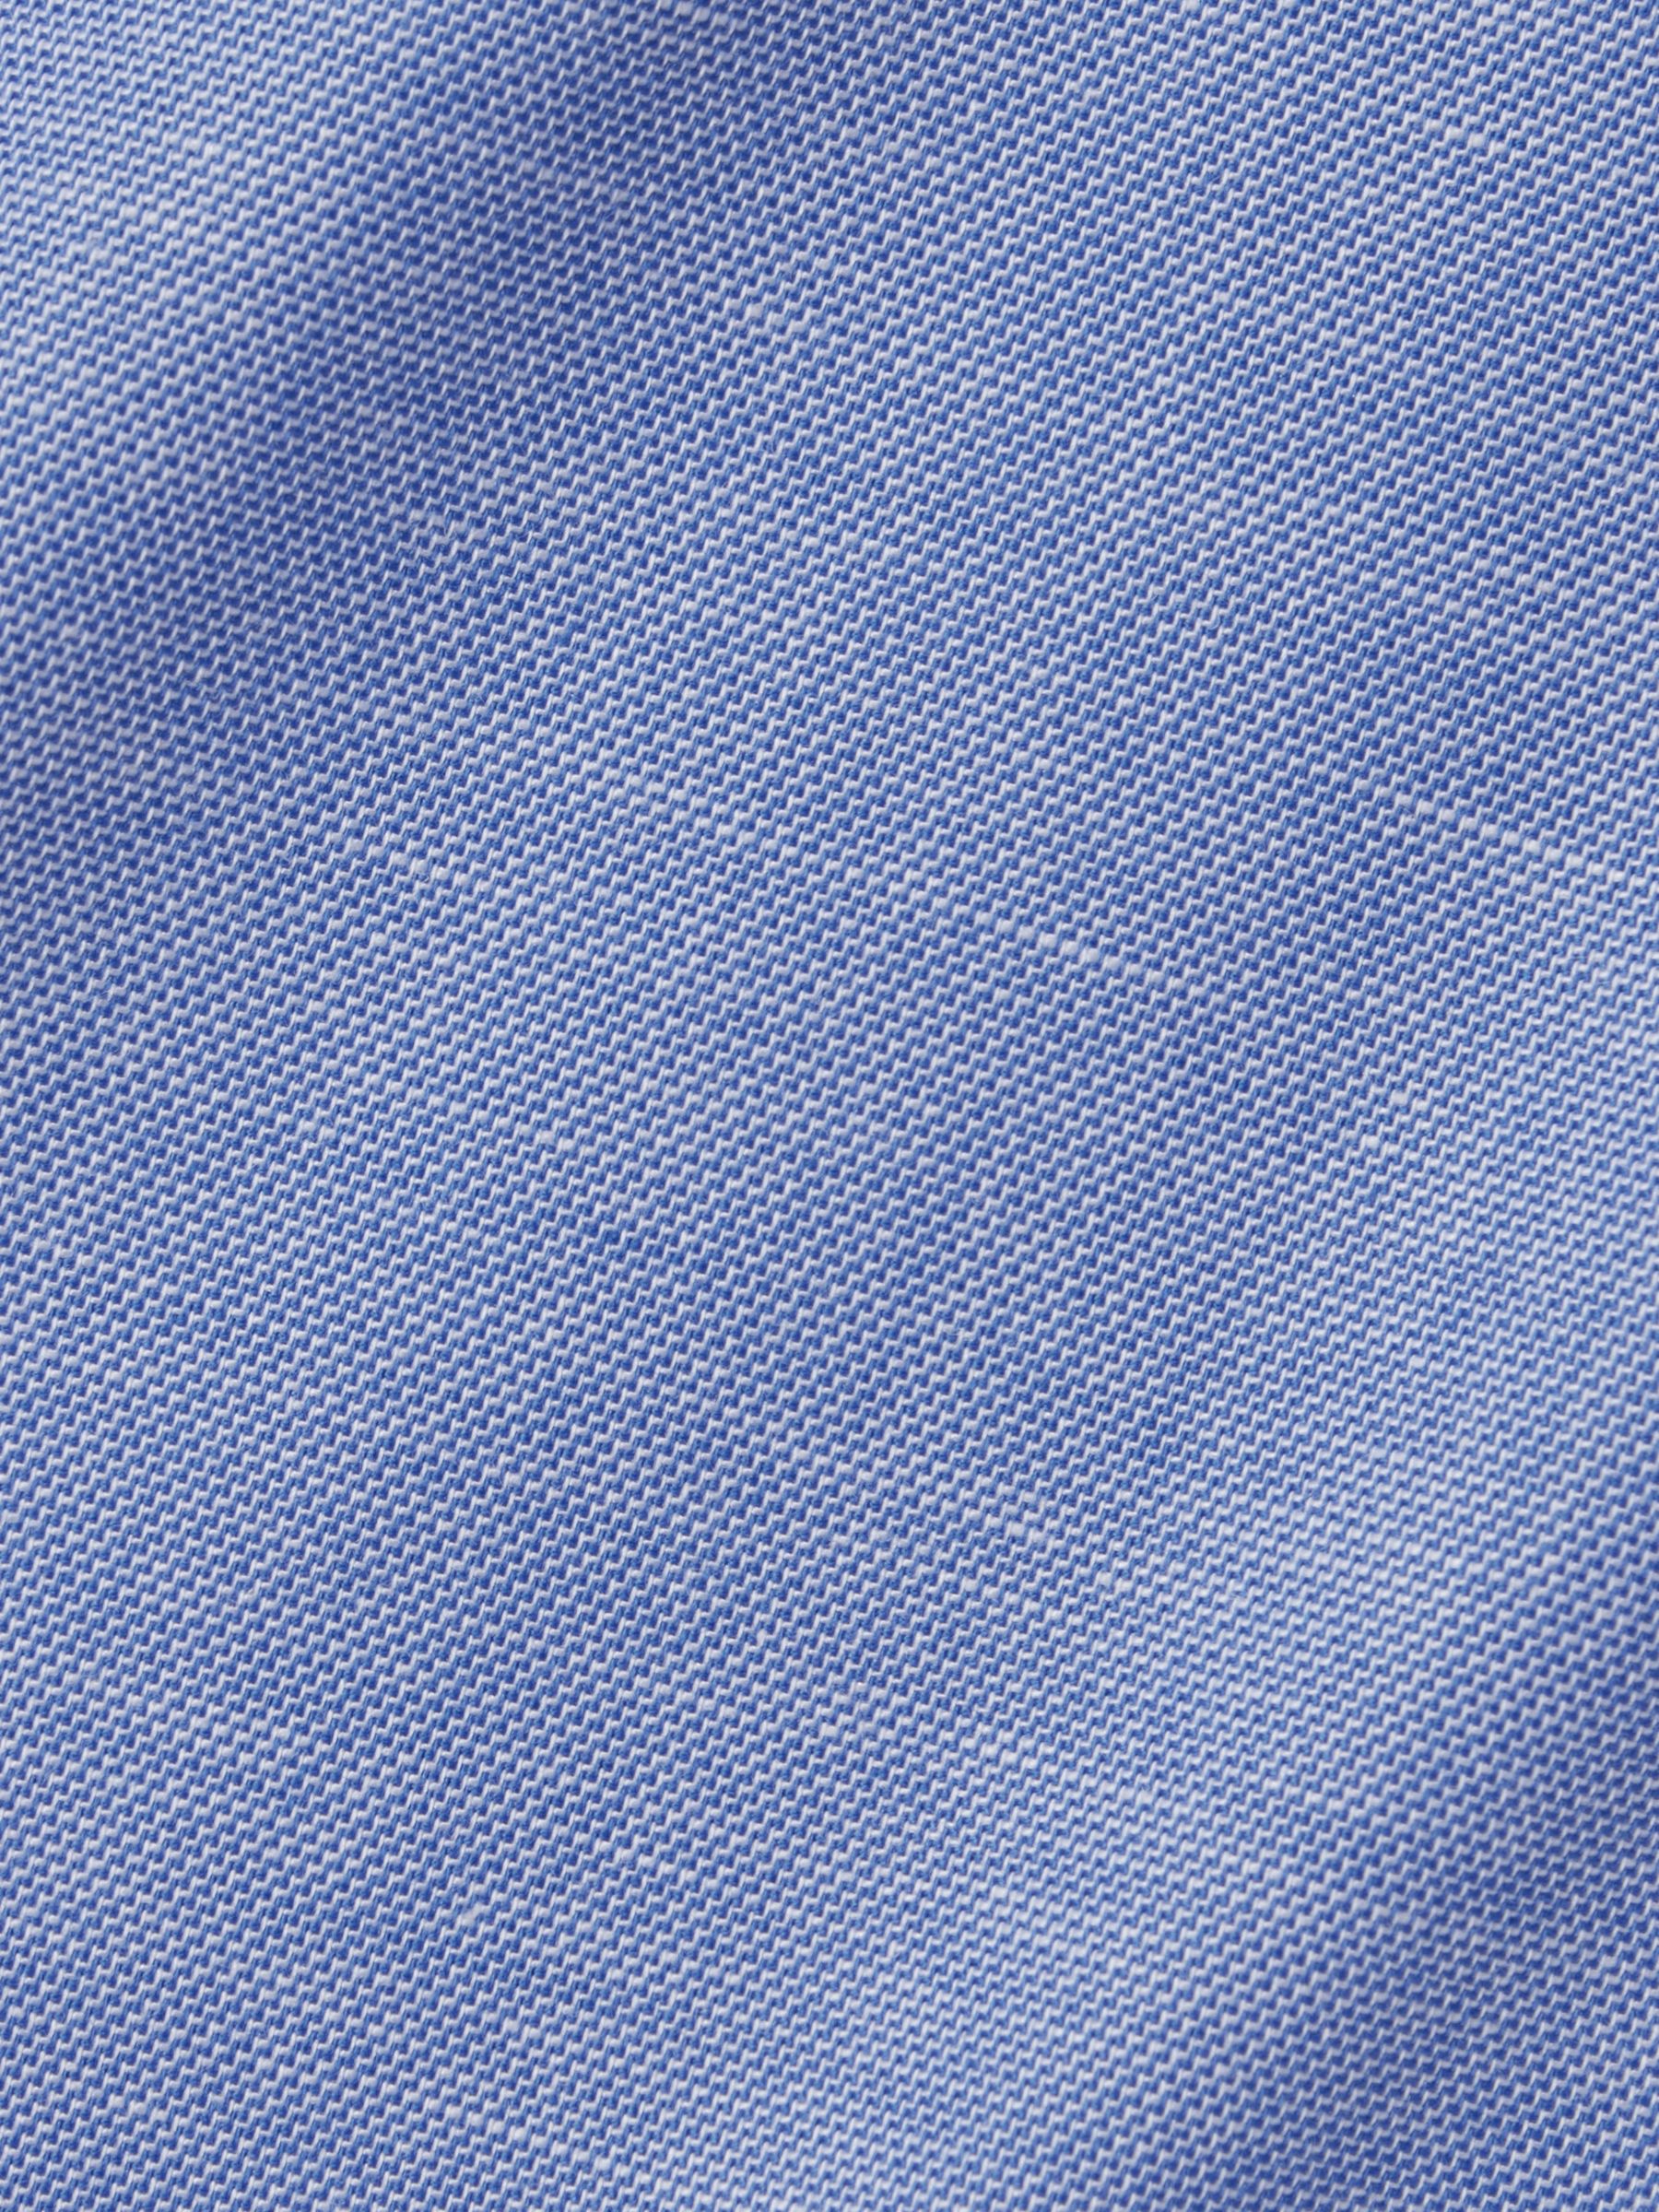 Charles Tyrwhitt Non-Iron Linen Blend Slim Fit Shirt, Cobalt Blue, 14.5